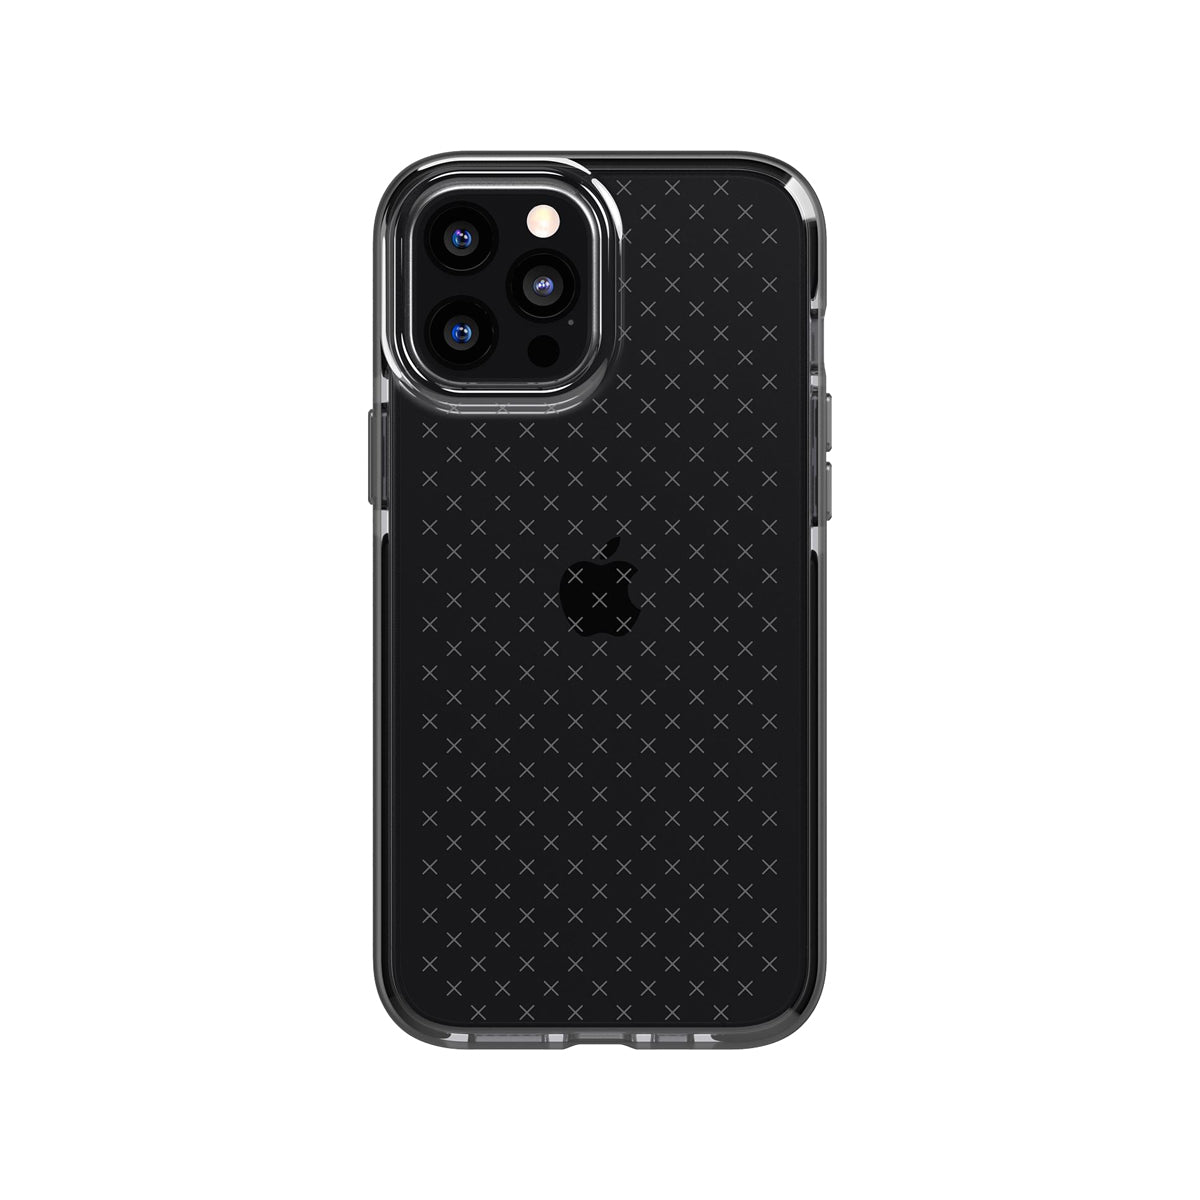 Tech21 Evo Check Phone Case for iPhone 12 Pro Max - Smokey Black.